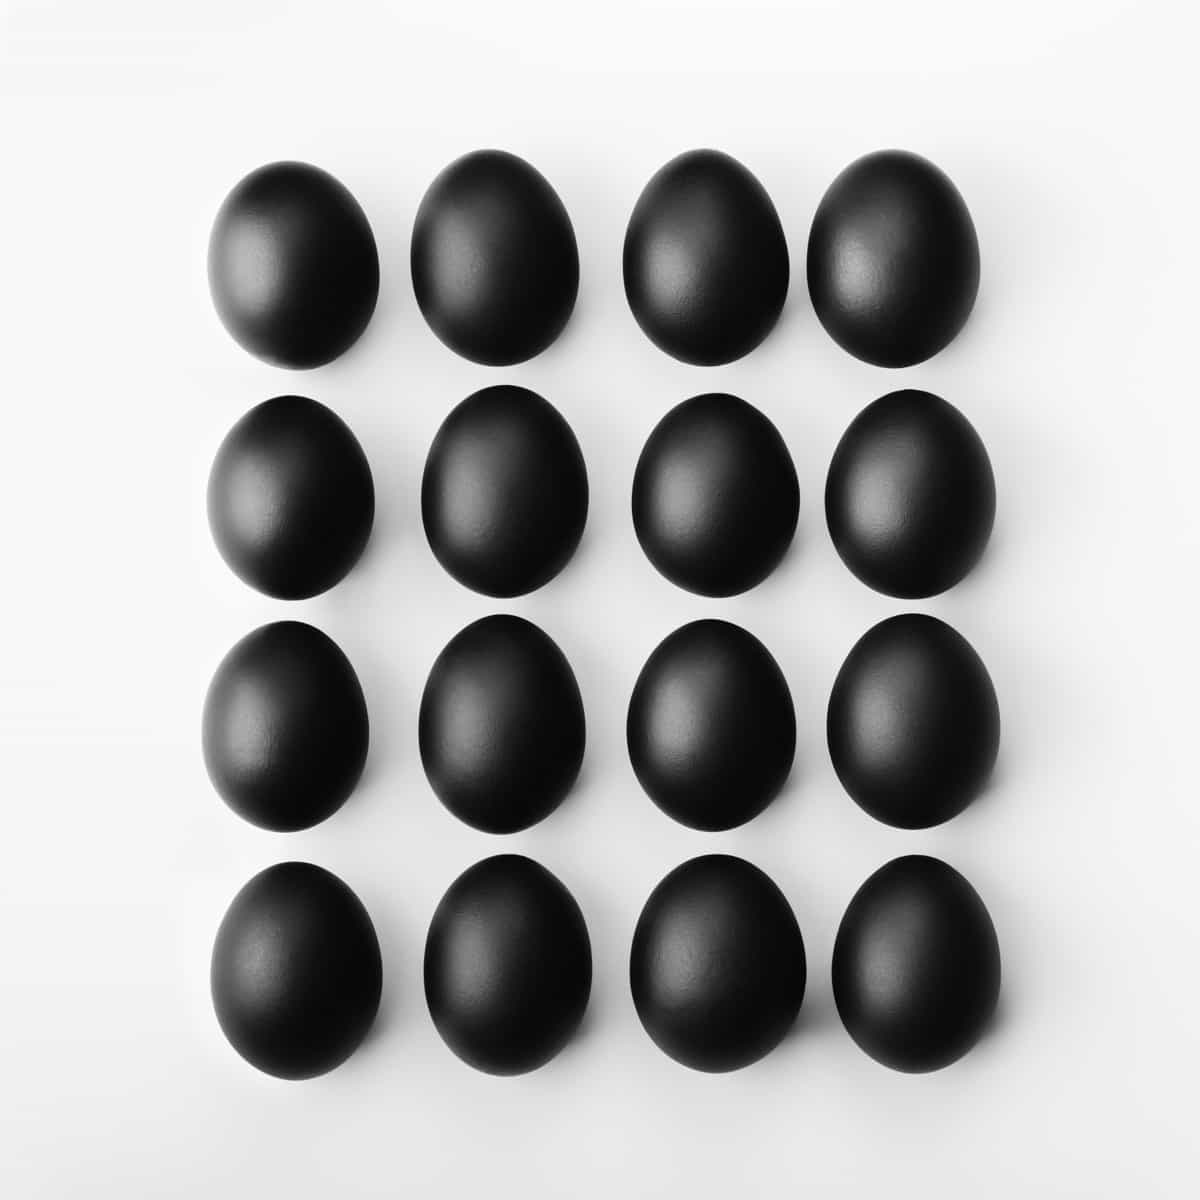 Black eggs concept